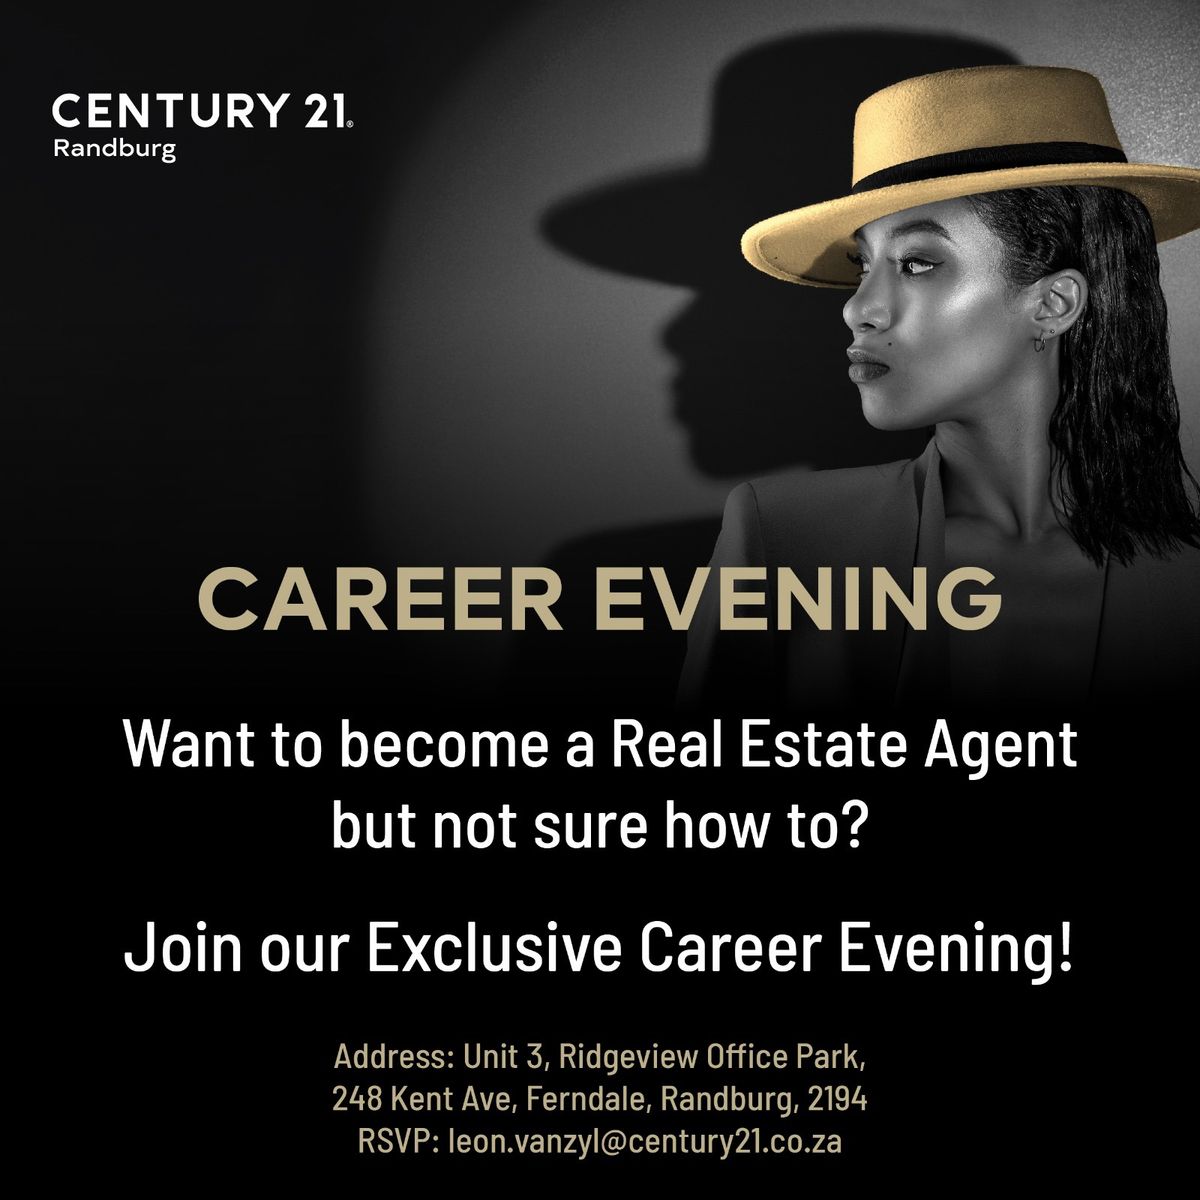 Century 21 Randburg Career Evening